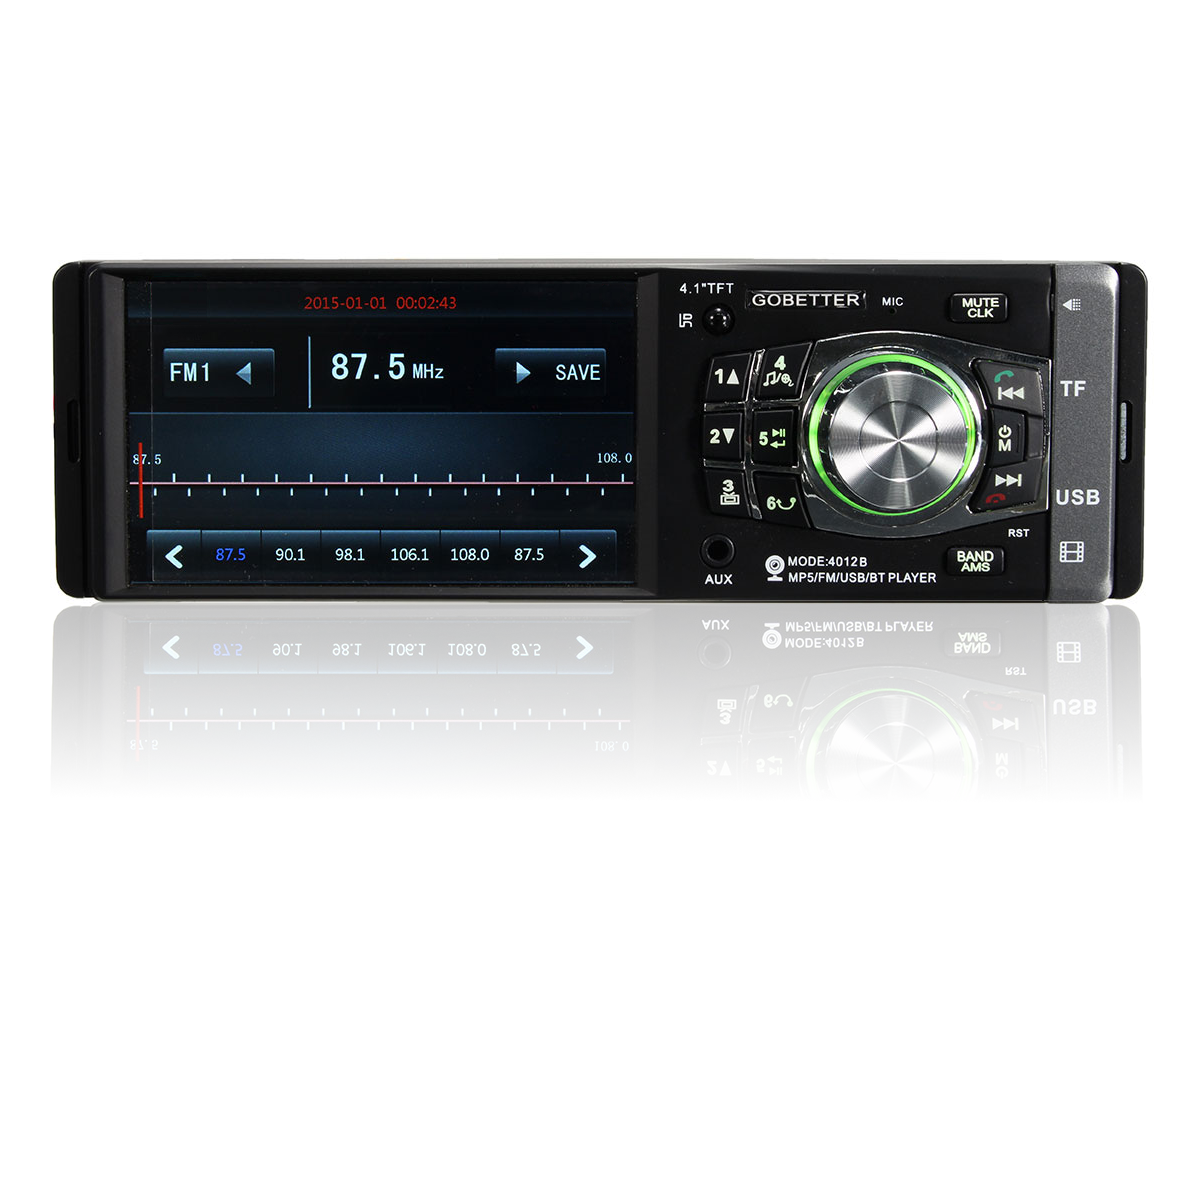 4012B 4.1 Inch Car Radio MP5 Player Bluetooth Auto Audio Stereo TF Card USB Hands Free FM HD Vedio Wheel Control with Rear View Camera